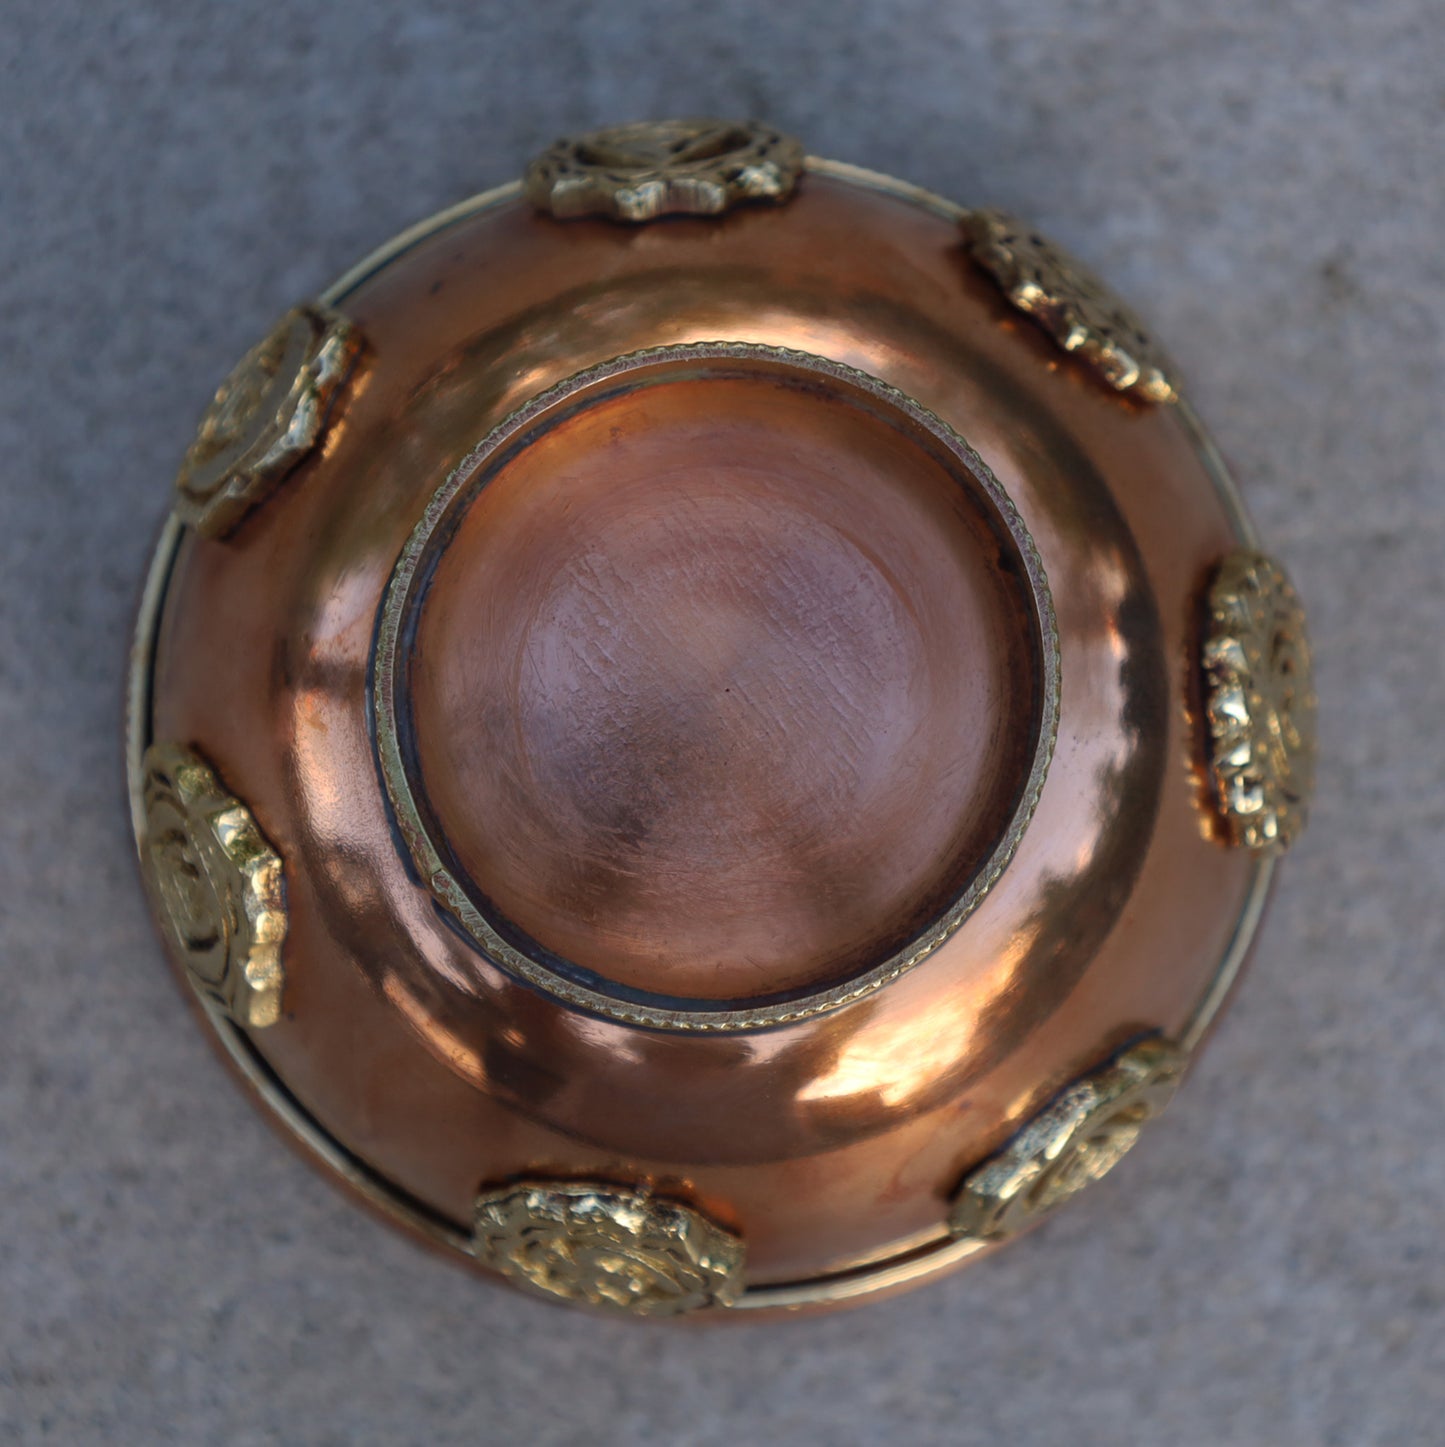 7 Chakra Copper Bowl Smudge, Charcoal, Incense Burner, Ritual Altar Bowl, Offering Bowl.